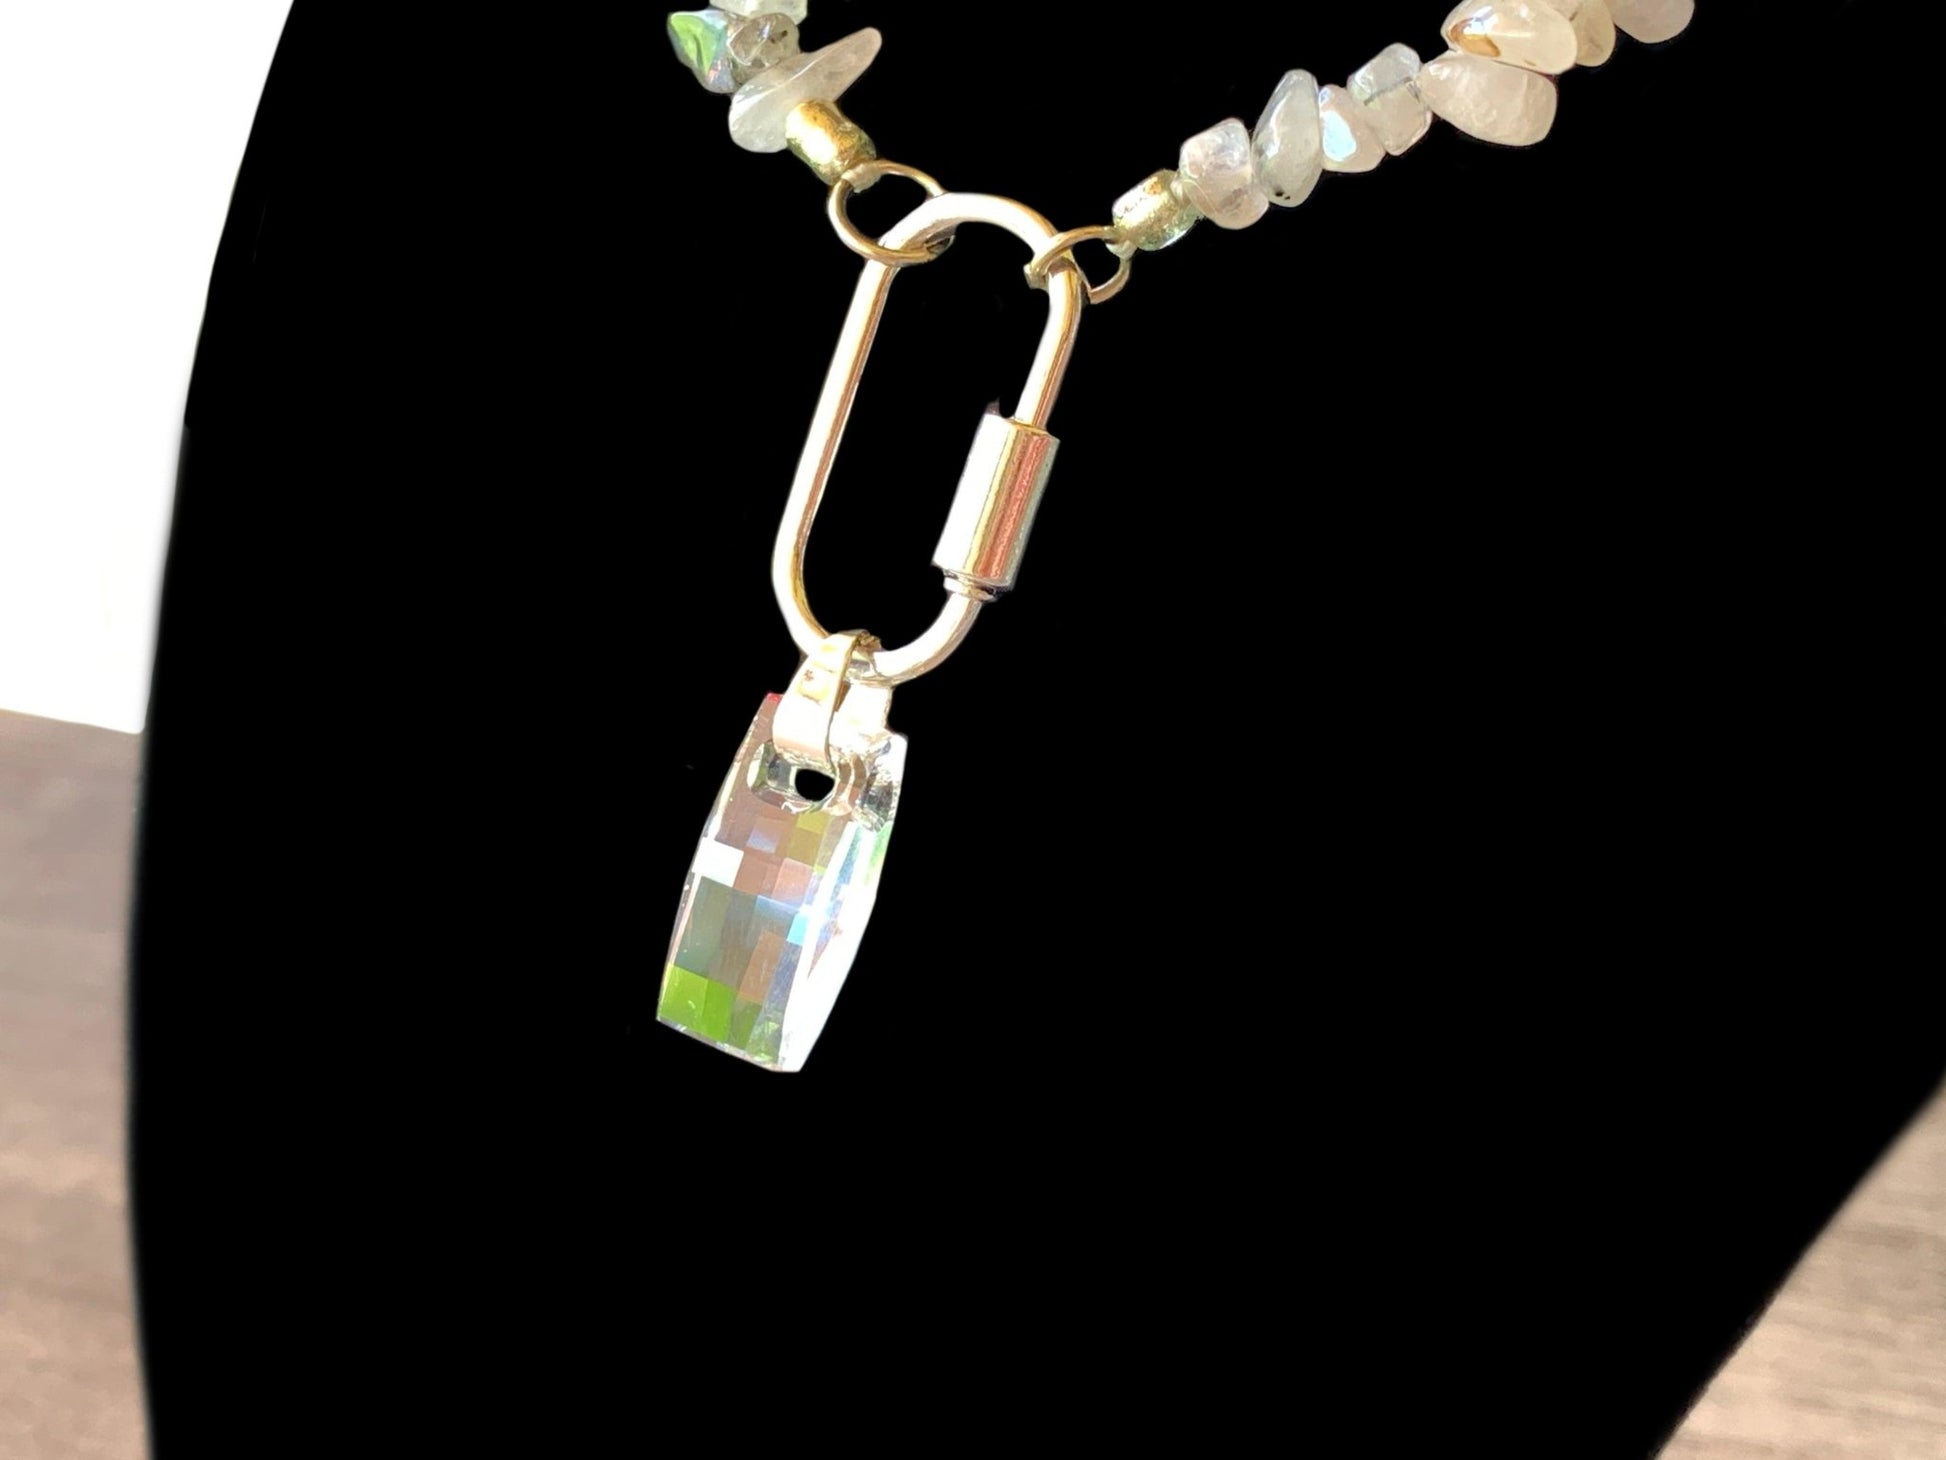 Esther Handmade Tourmalinated Quartz 17" Necklace/ Choker with Swarovski Crystal Elements Pendant - Born Mystics